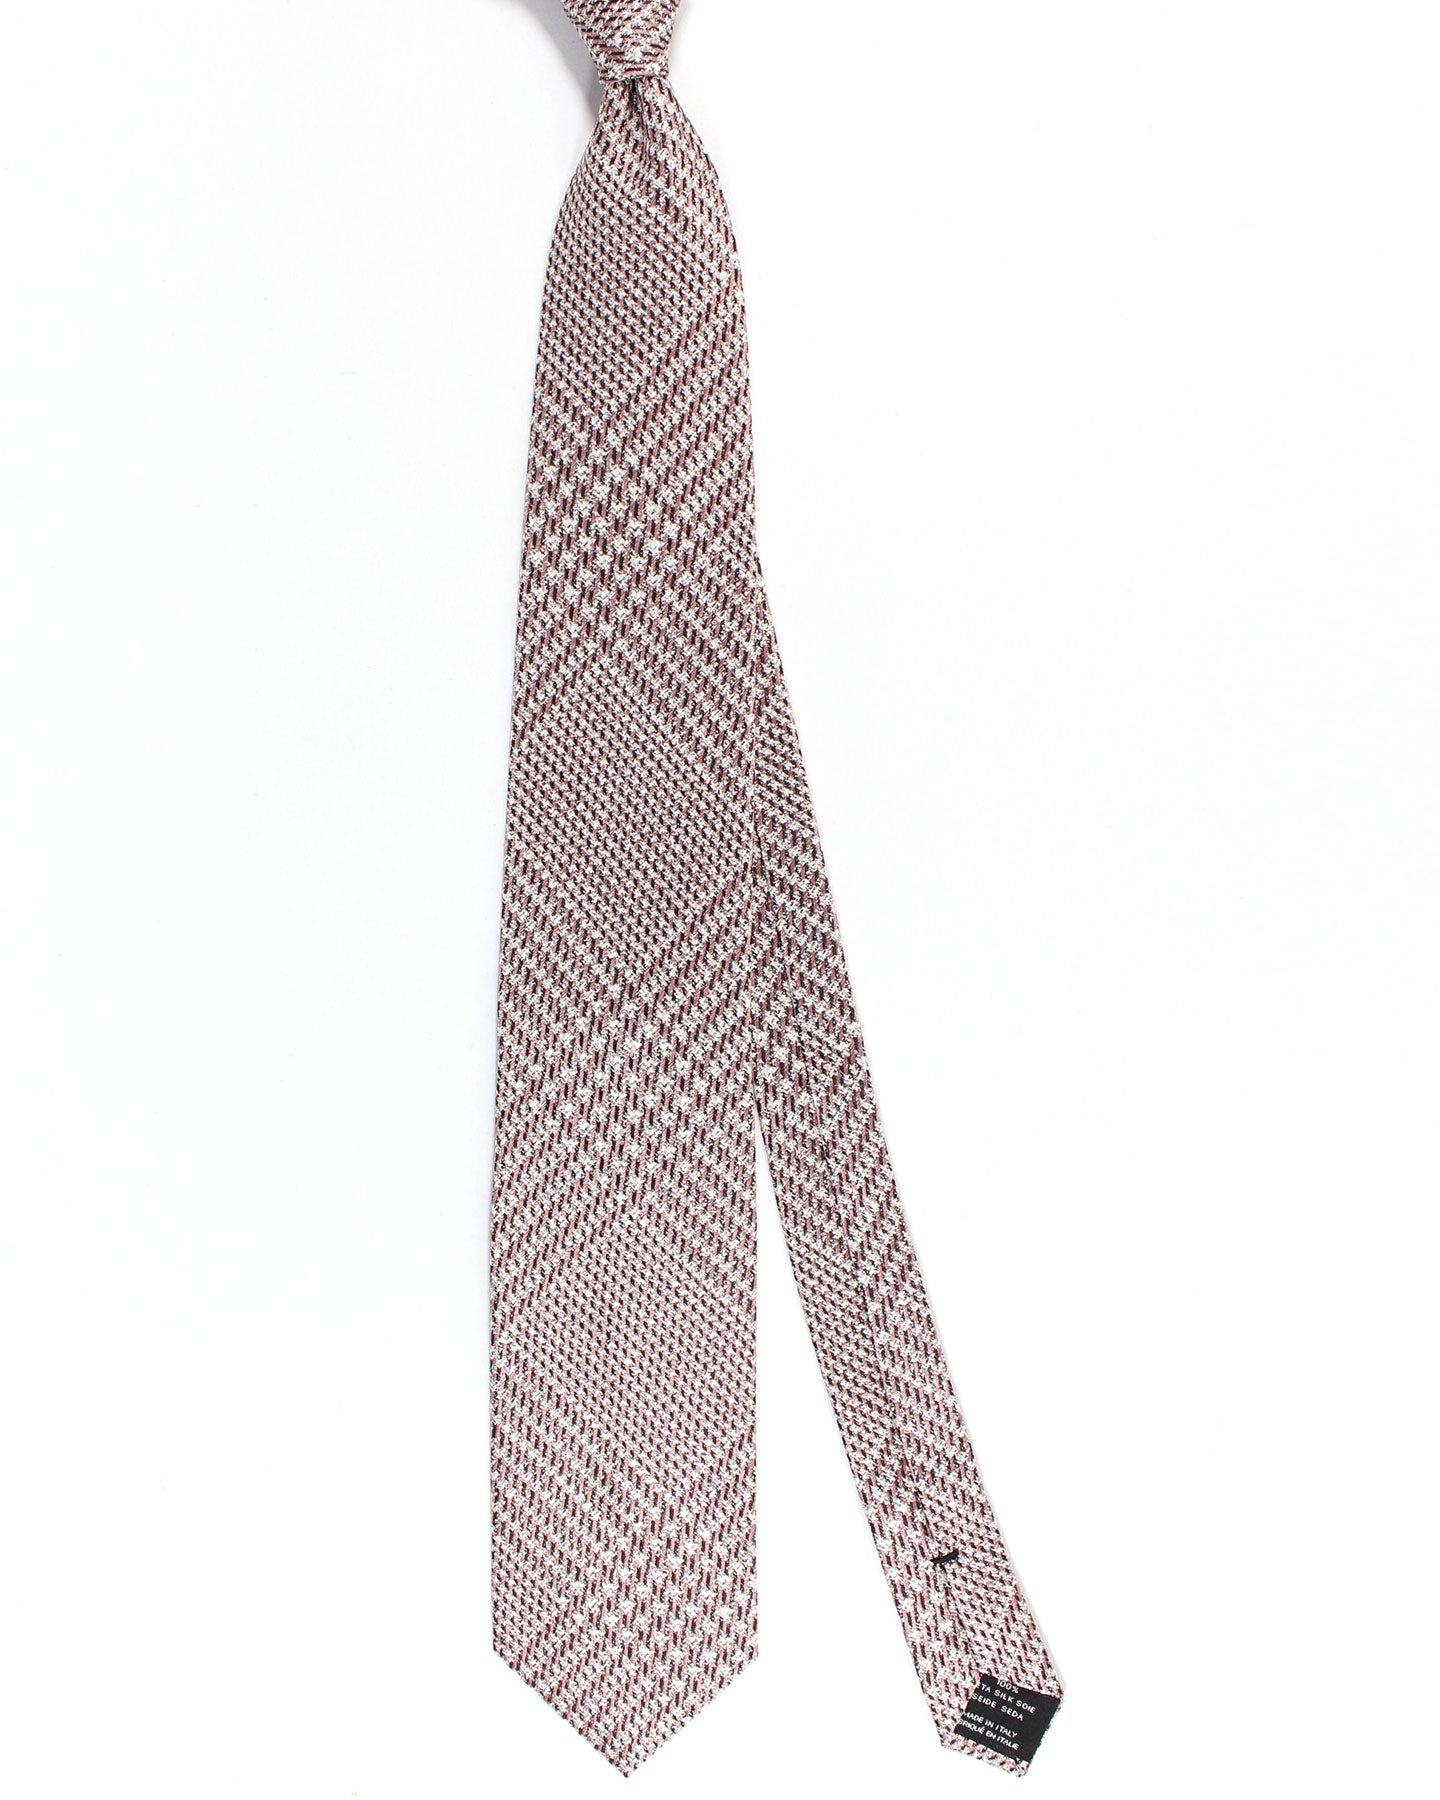 Tom Ford Silk Tie Dust Pink Glen Check